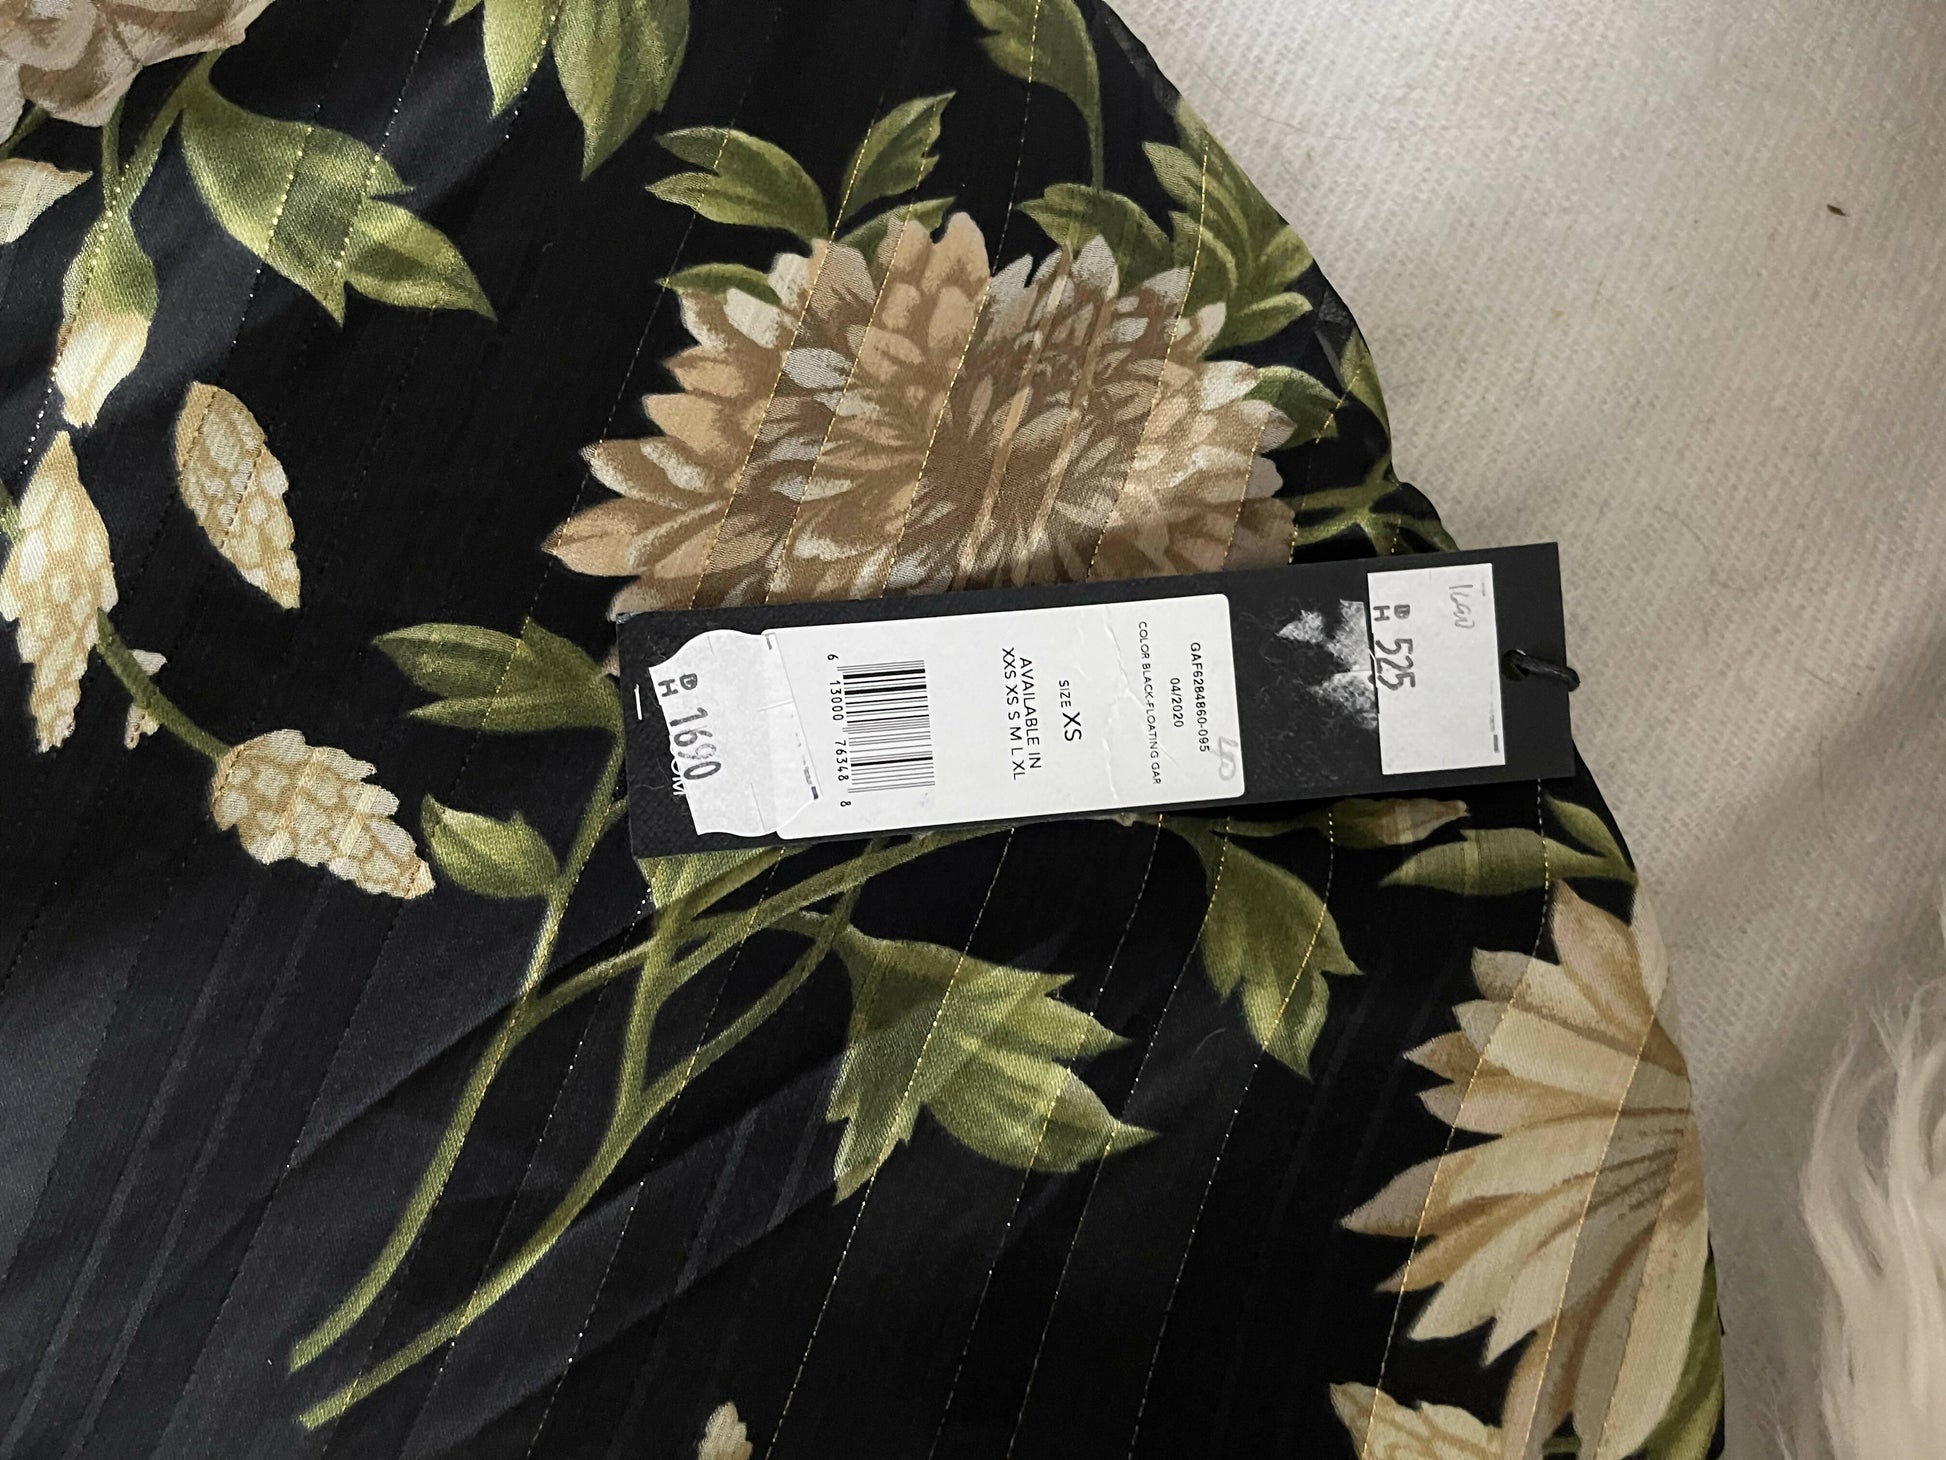 Black Floral Strapless Maxi Dress - Endless